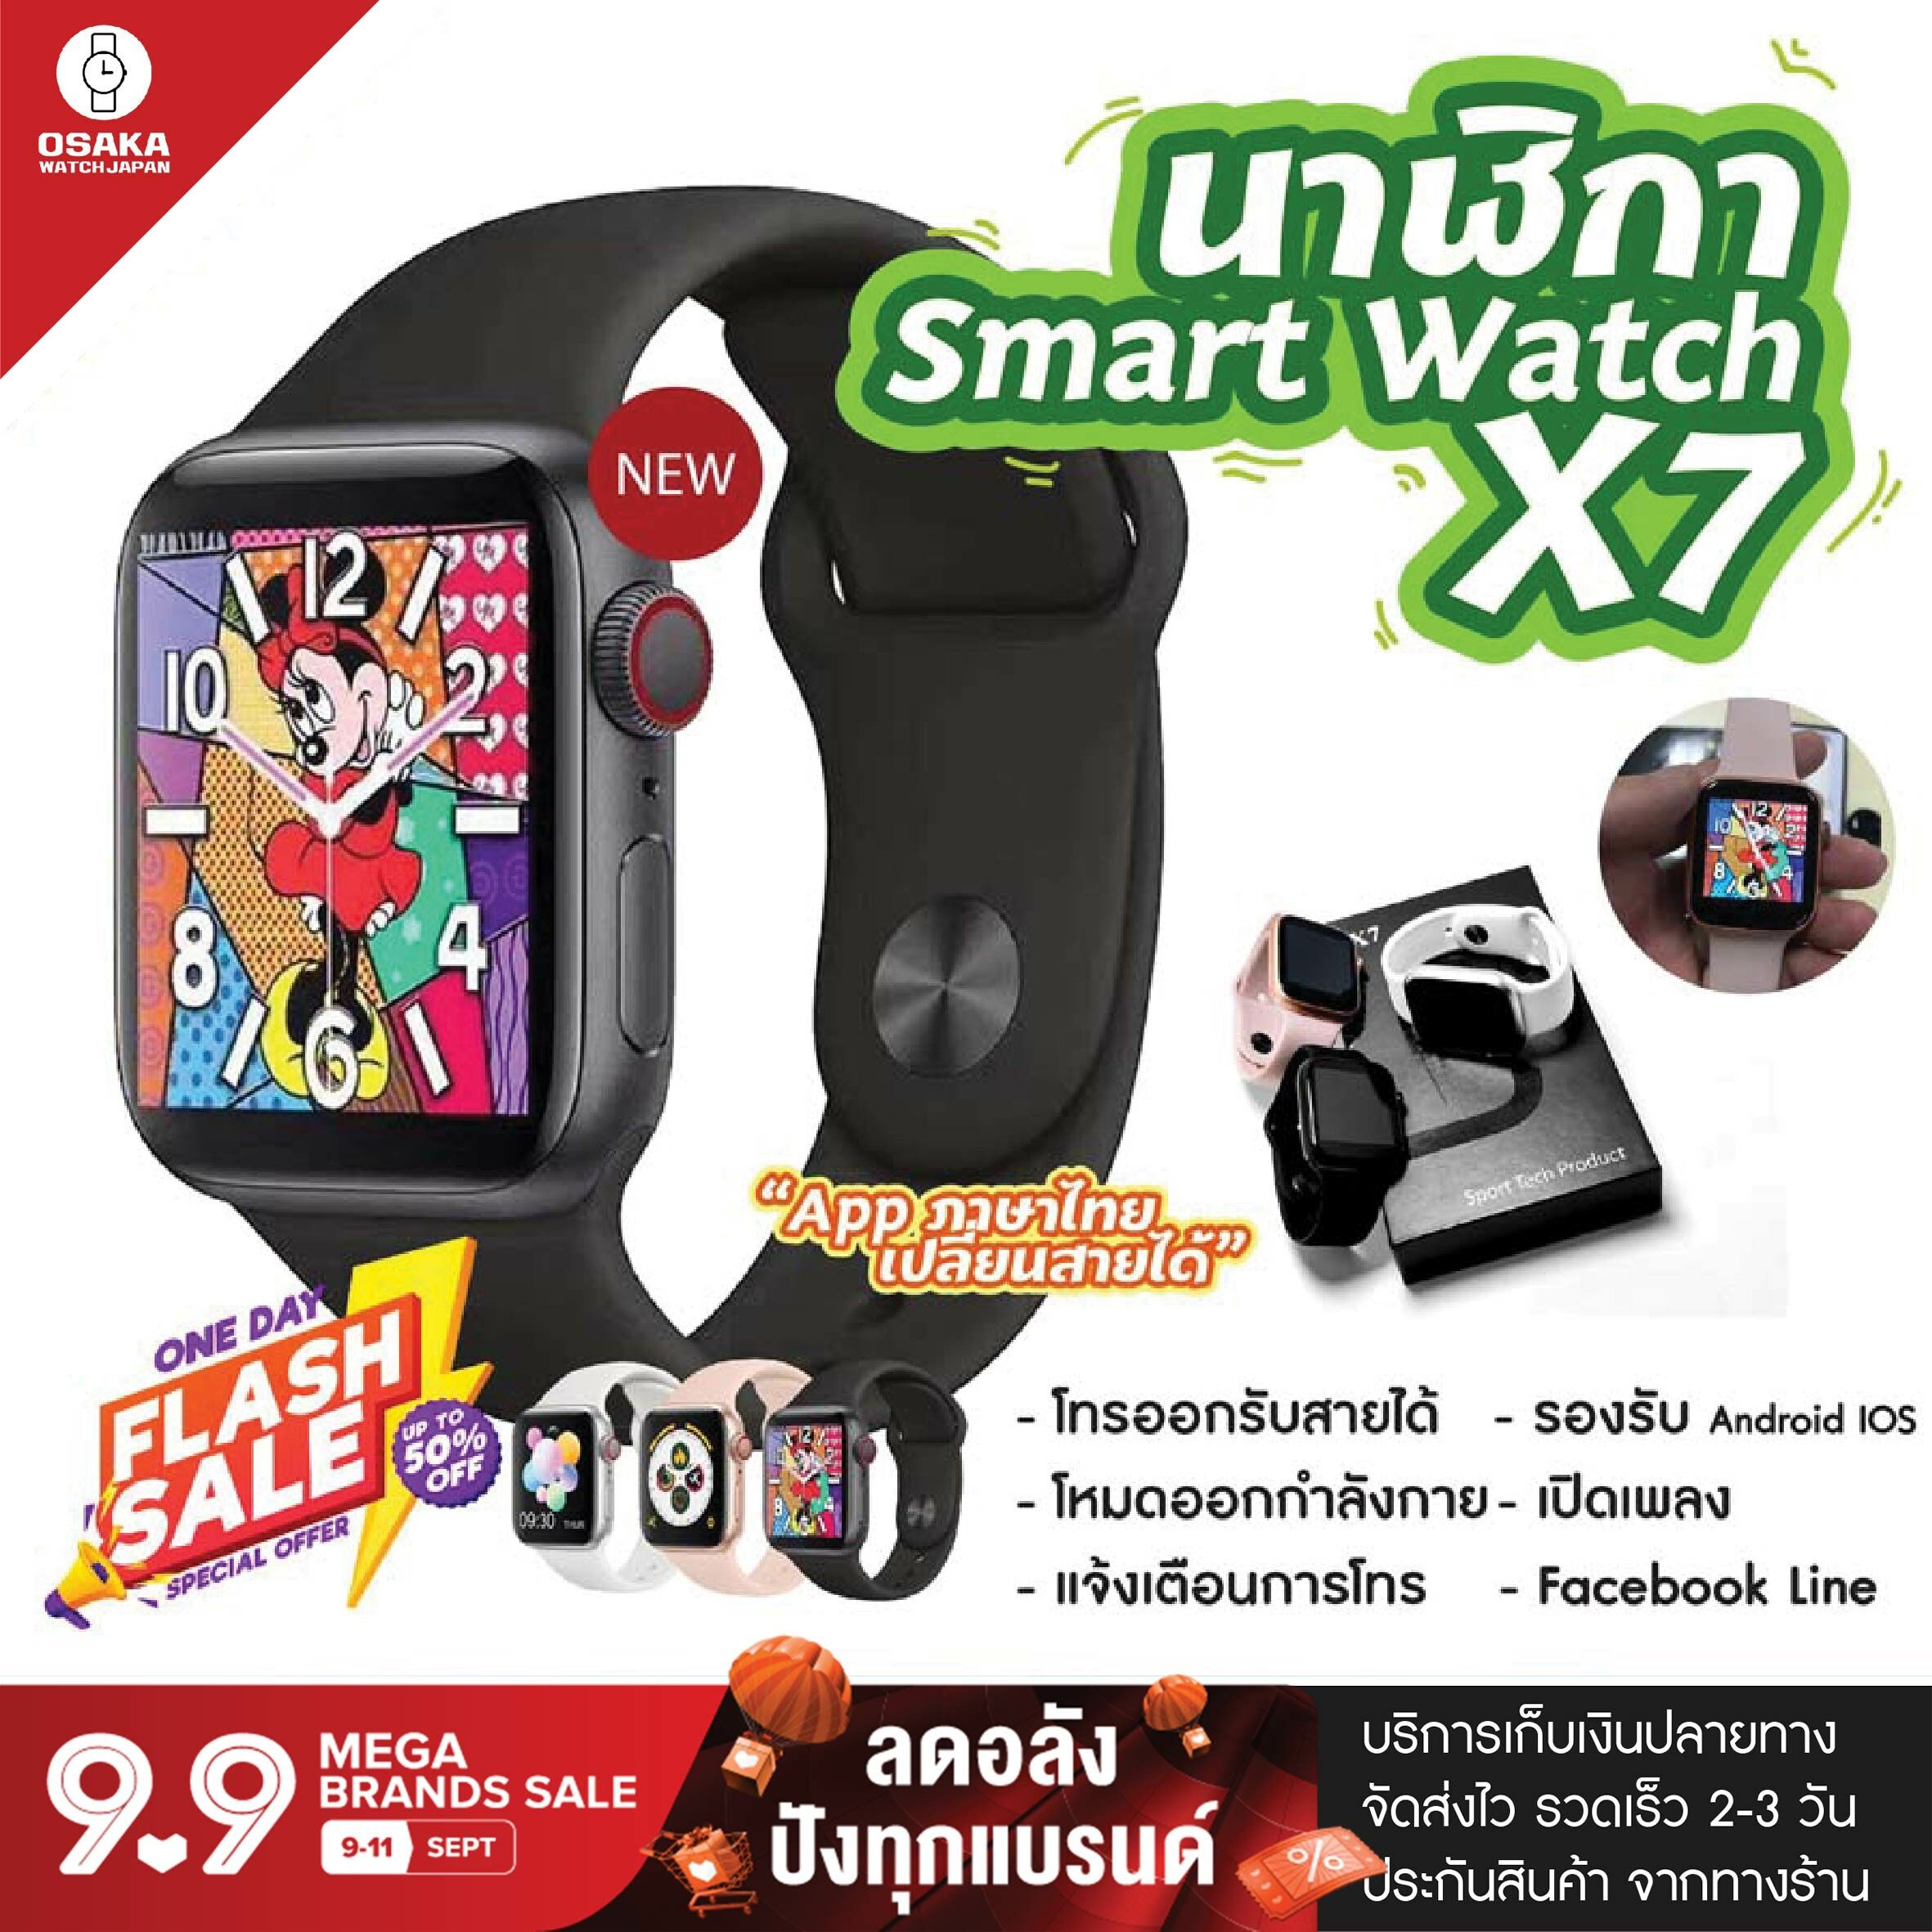 smart watch X7 pro max [สินค้าส่งจากไทย] [การันตีถูกสุด!!] นาฬิกาสมาร์ทวอชท์ สมาร์ทวอชท์ นาฬิกา นาฬิกาข้อมือ นาฬิกาเพื่อสุขภาพ